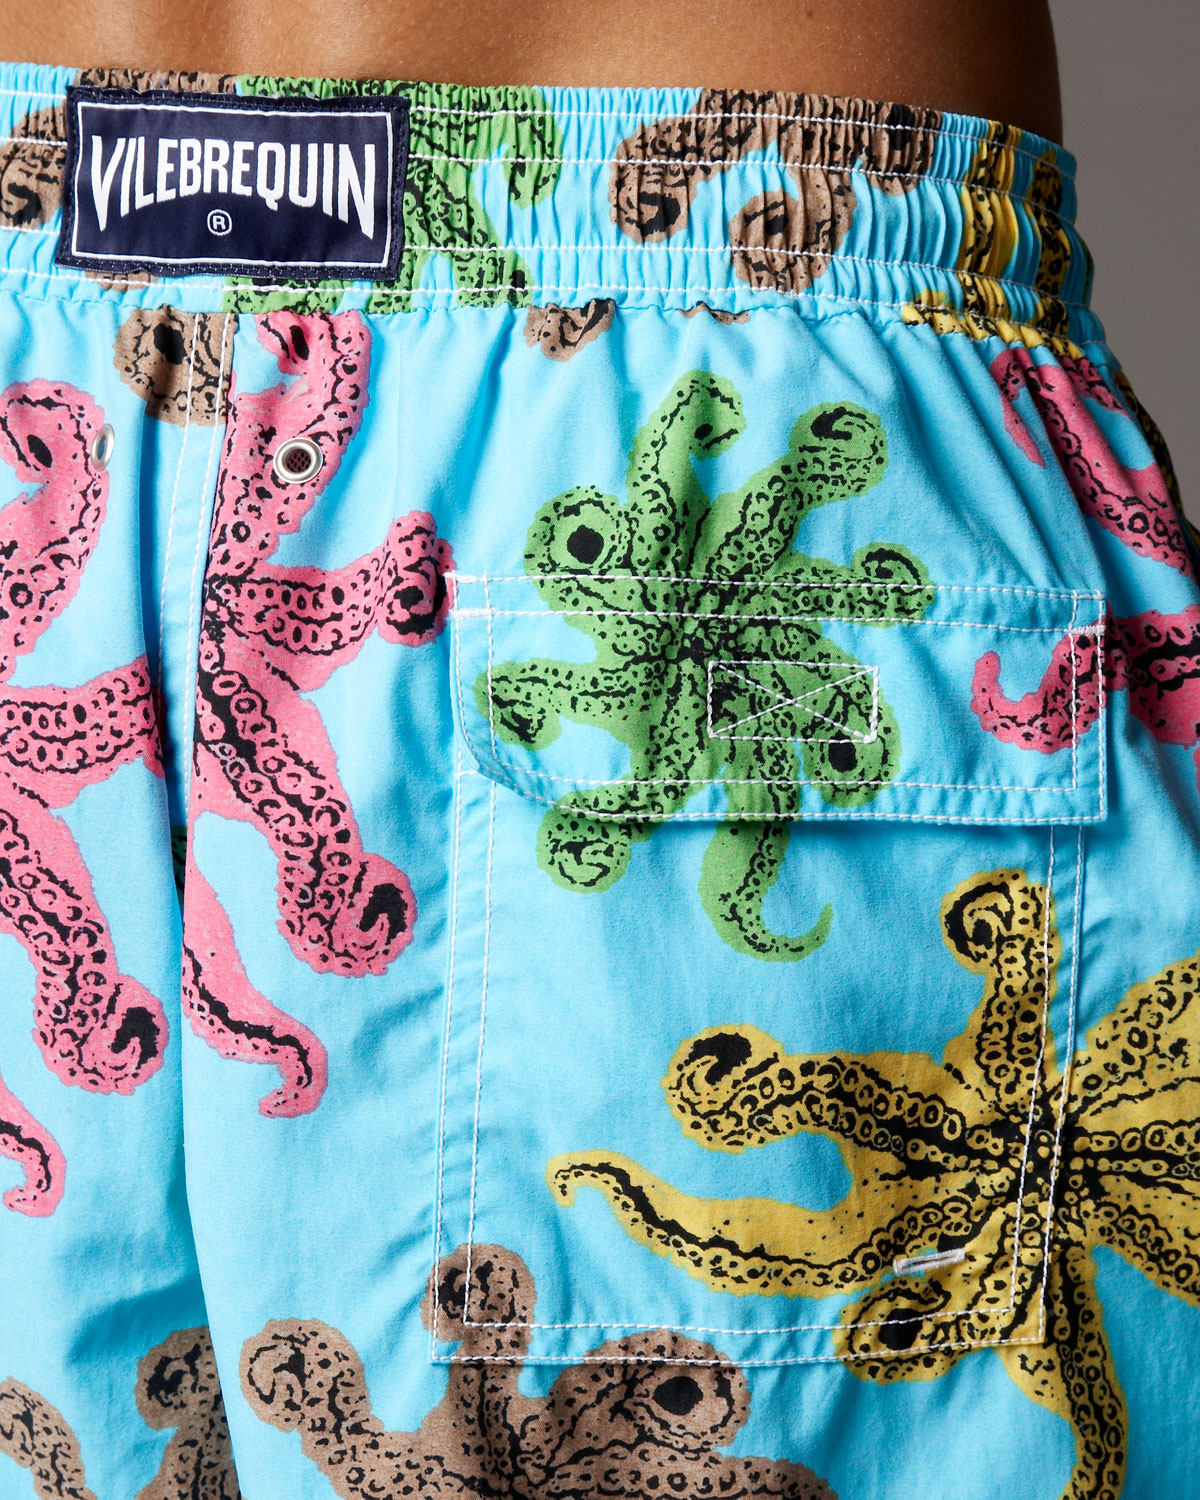 Lyst - Vilebrequin Okoa Octopus Board Shorts for Men